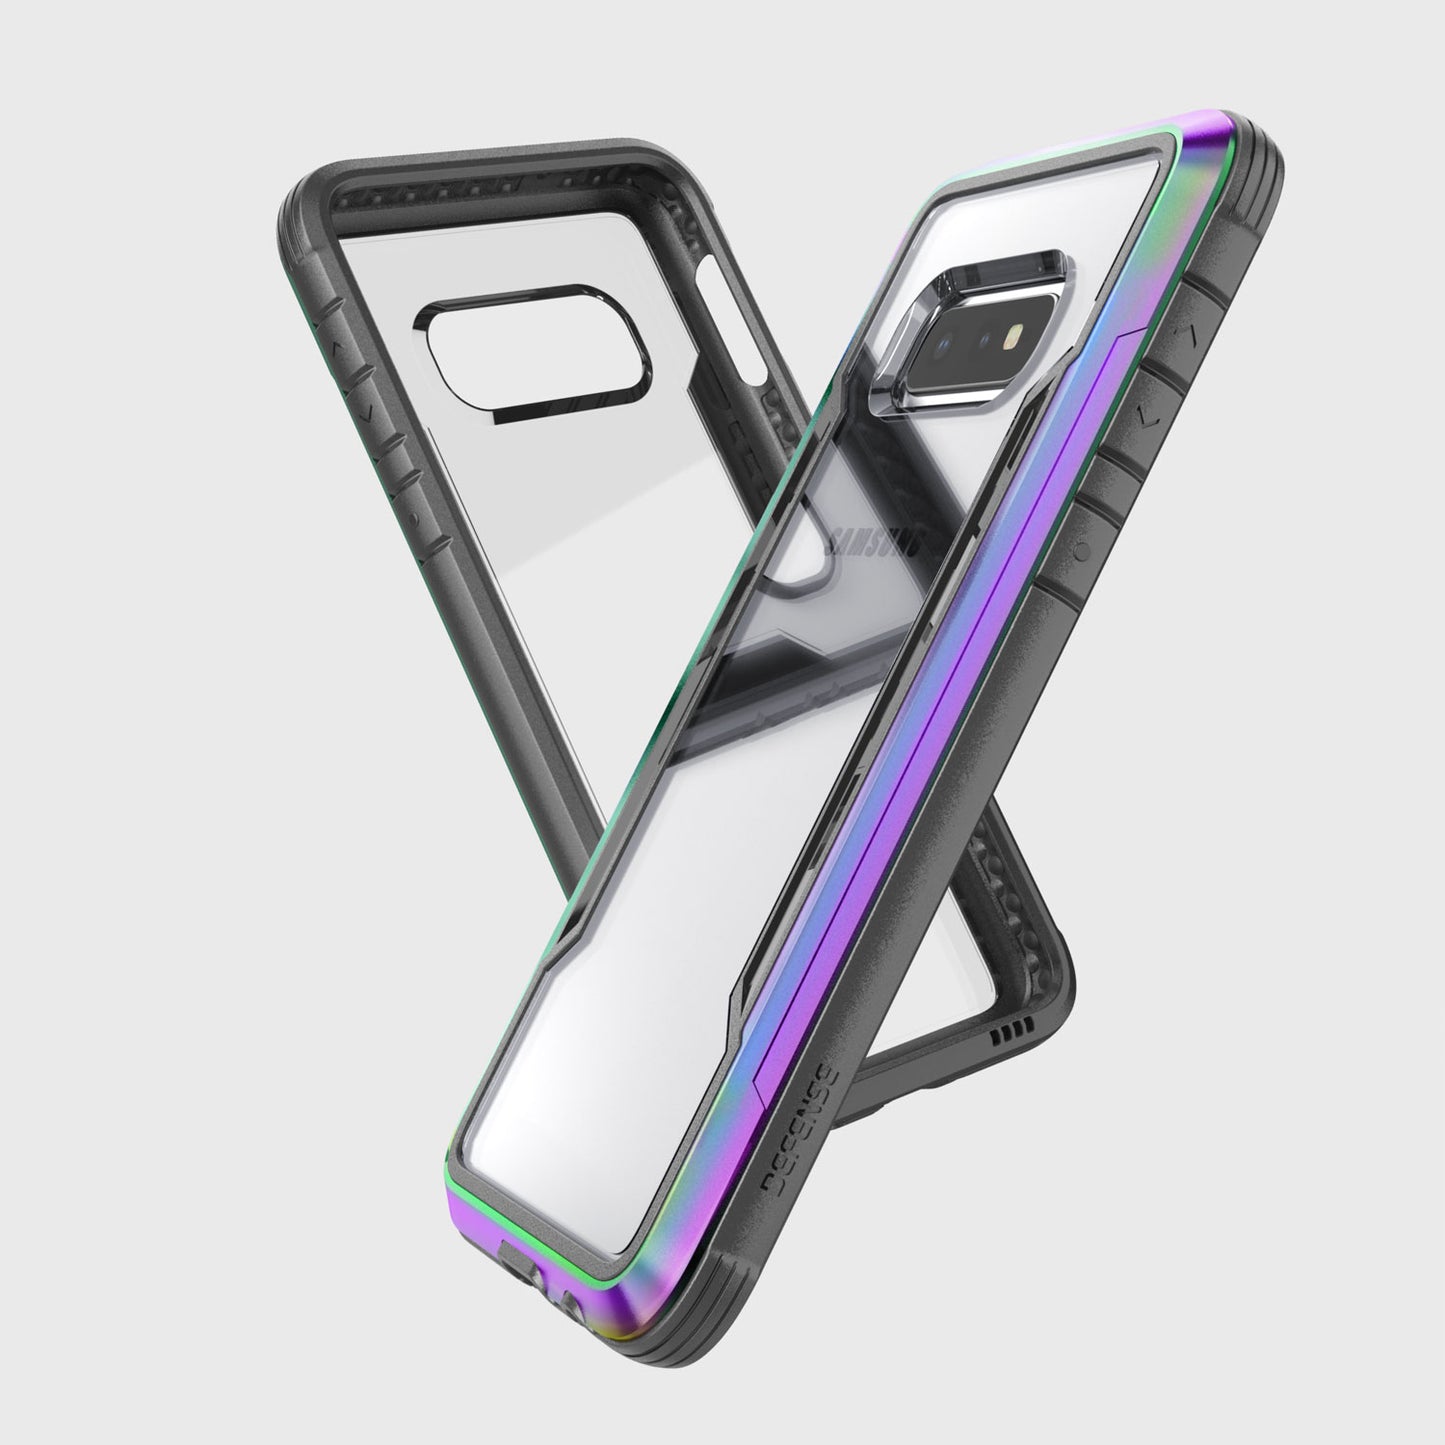 Samsung Galaxy S10 Case Raptic Shield Iridescent